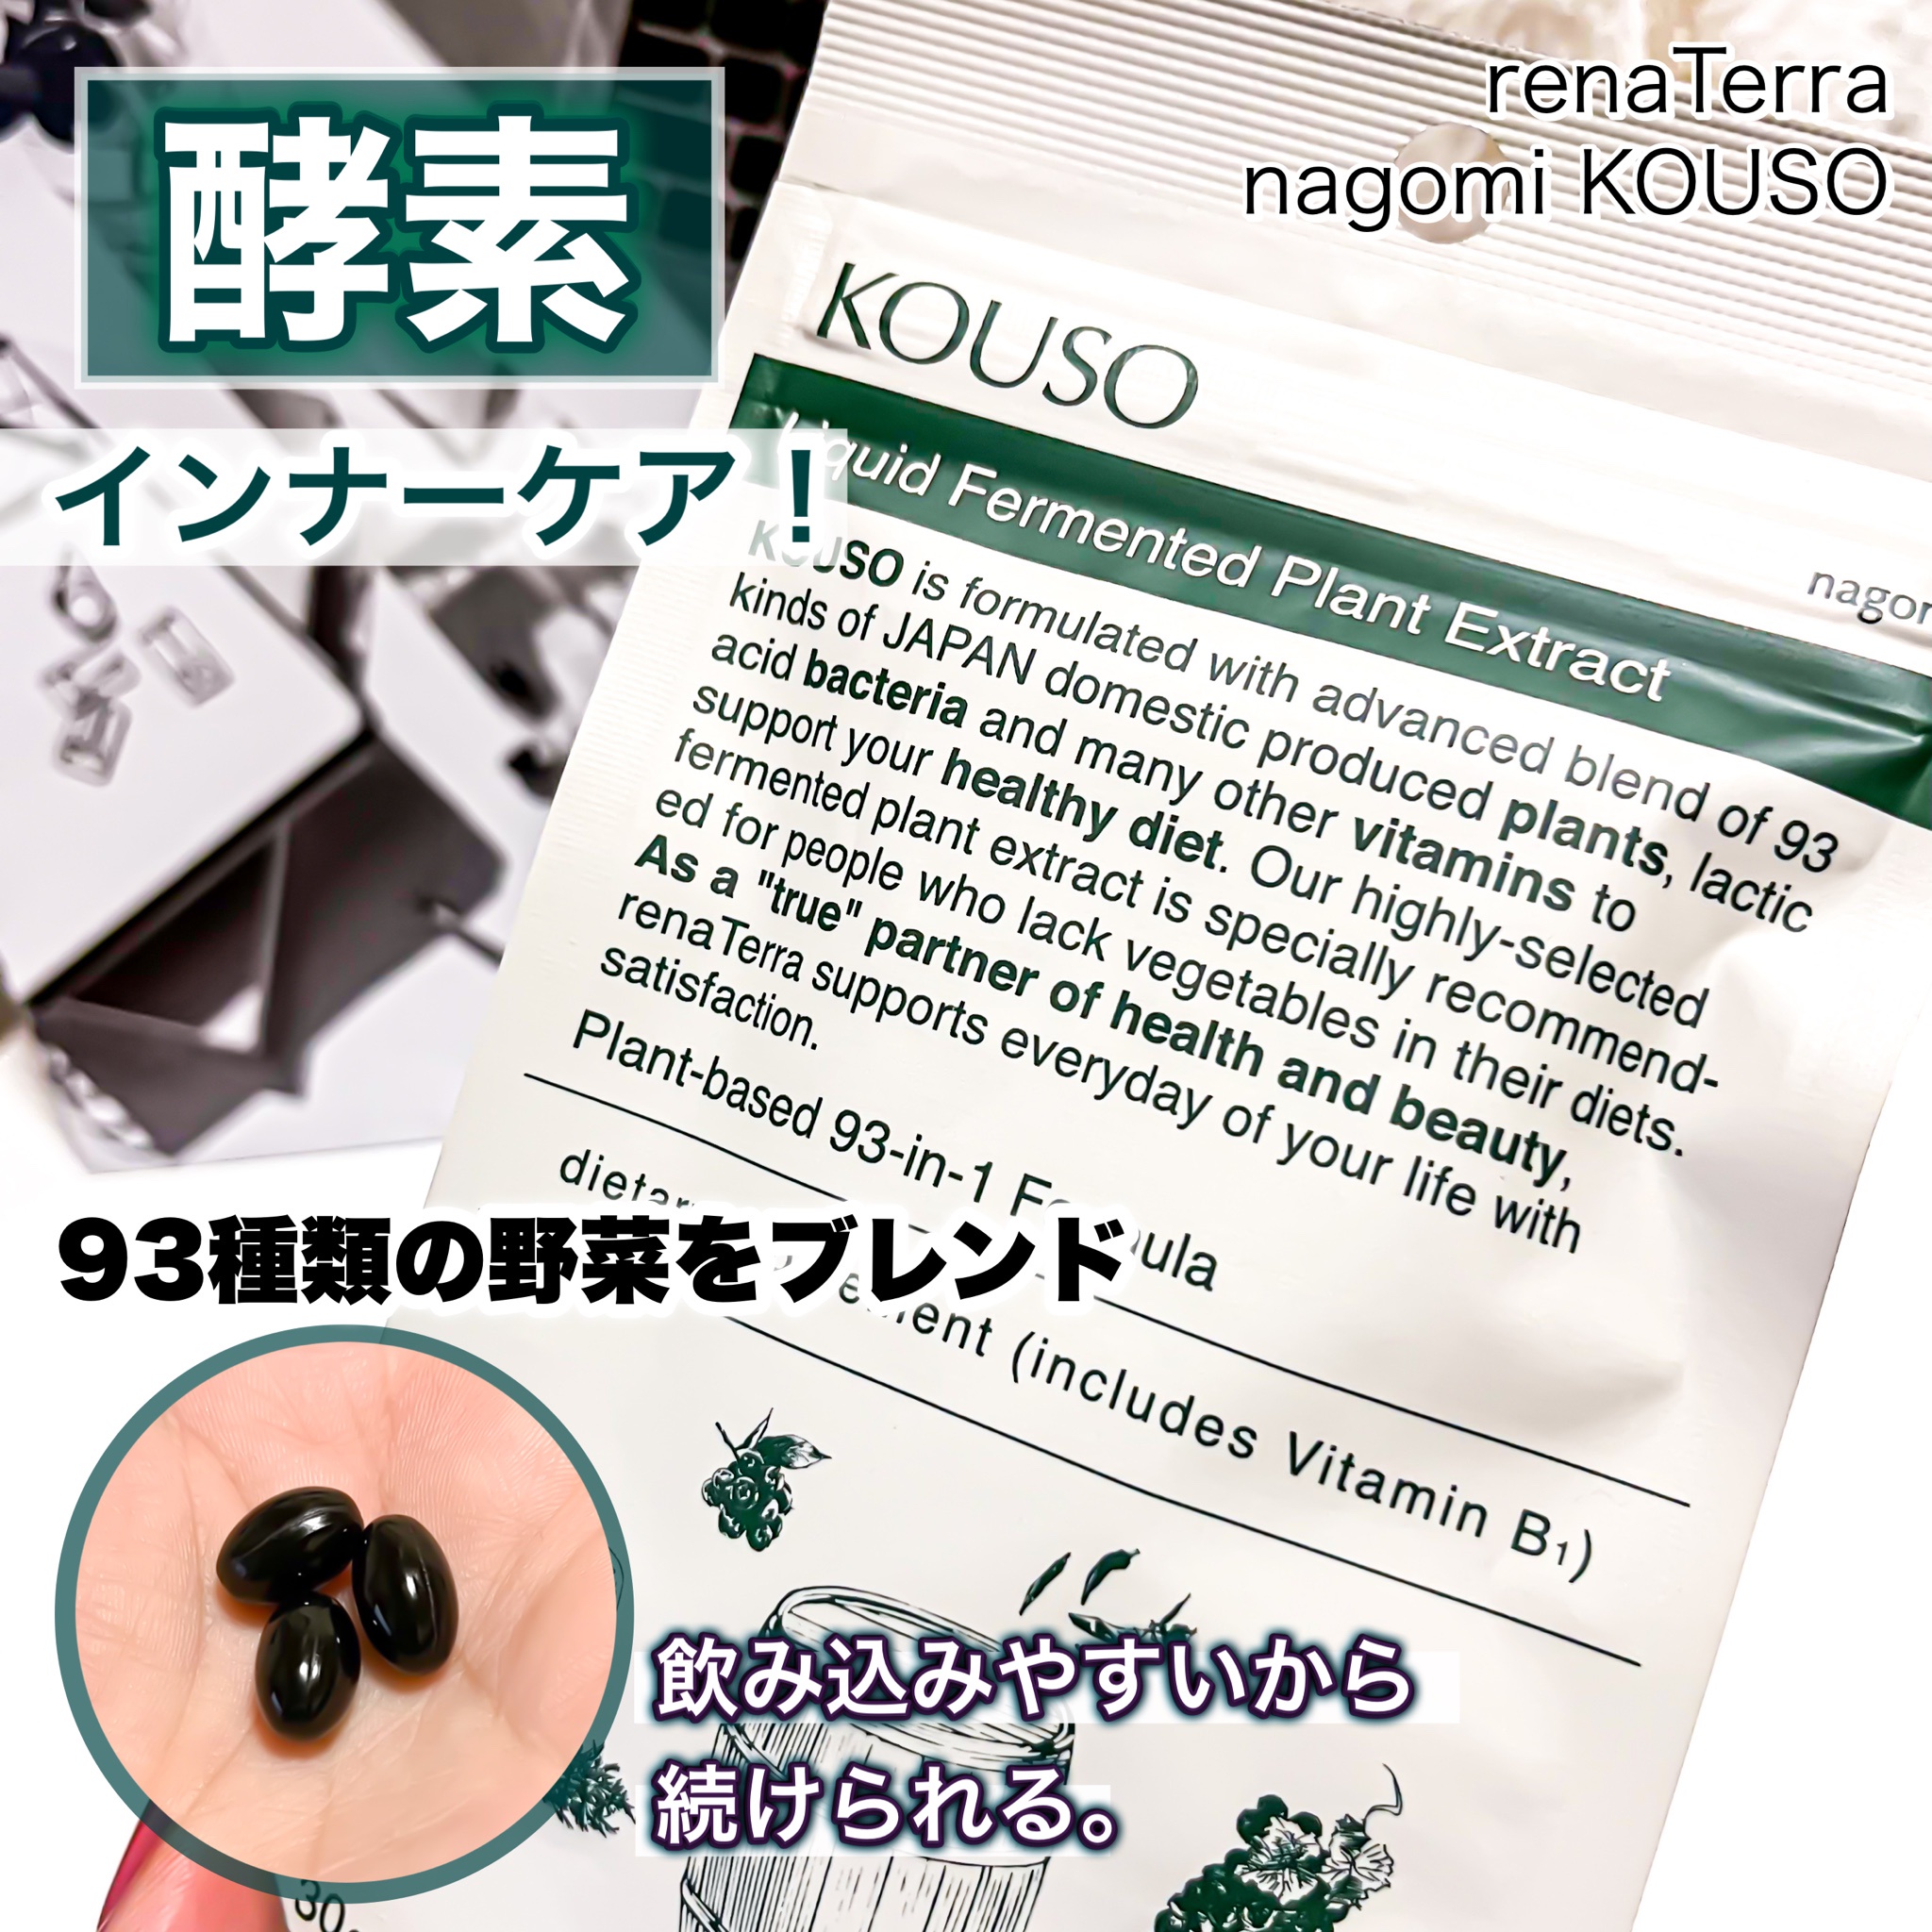 renaTerra / nagomi KOUSOの公式商品情報｜美容・化粧品情報はアットコスメ